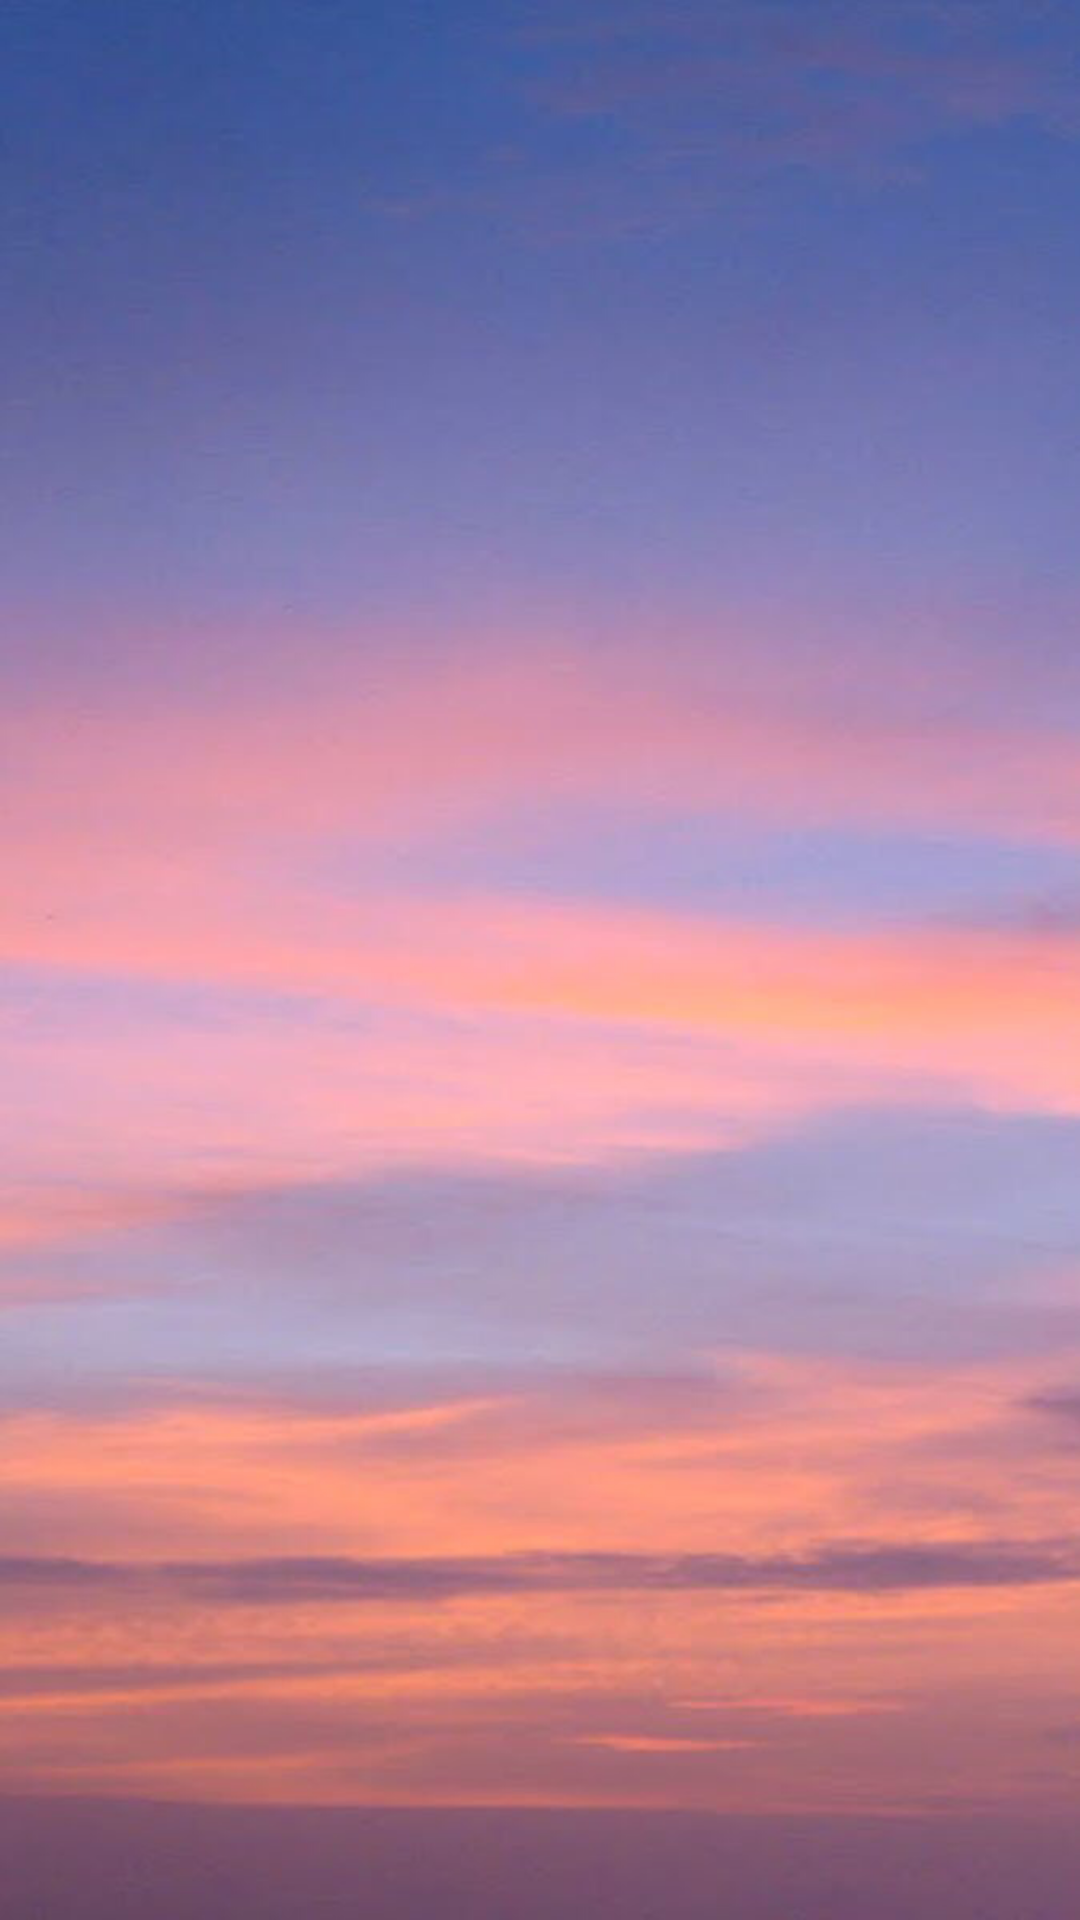 Aesthetic iPhone Wallpaper. Blue sky wallpaper, Blue sunset, Orange painting